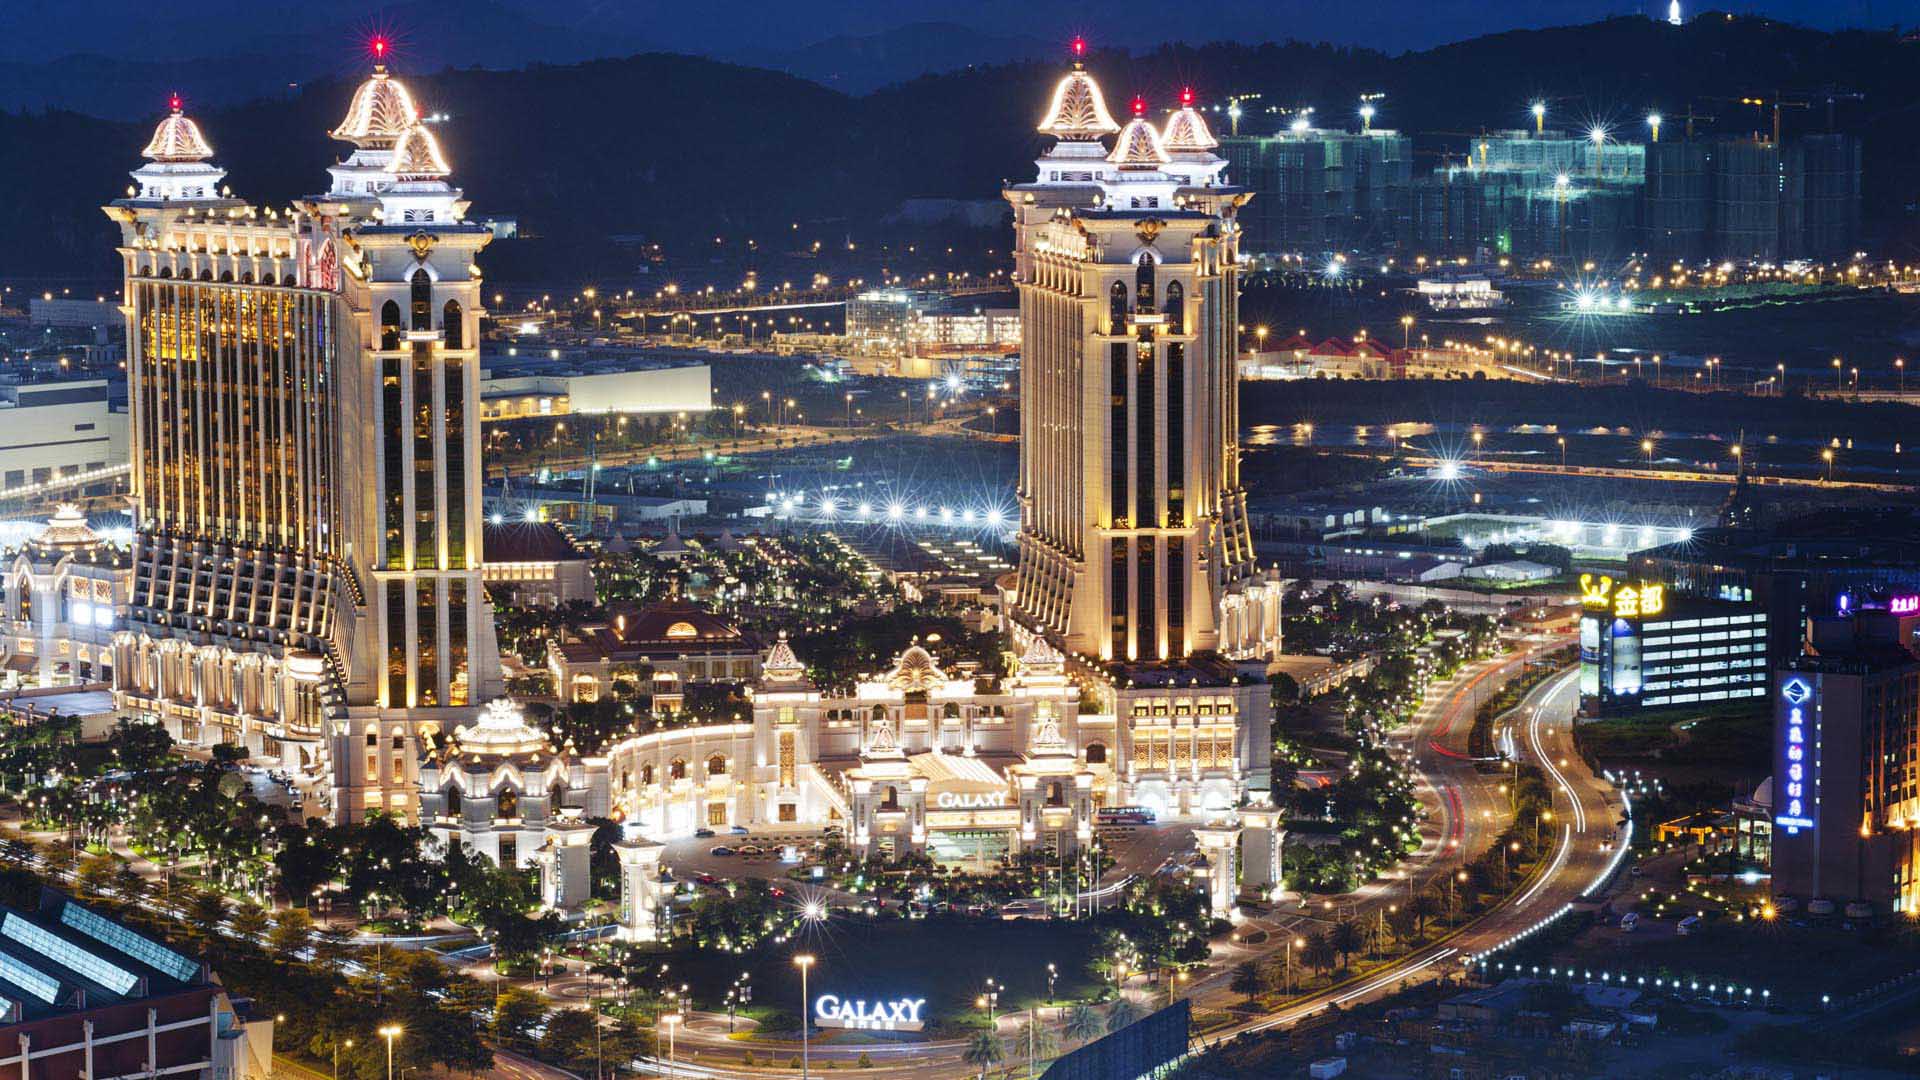 Luxury Resort Galaxy Macau Hotel & Casino China Desktop Wallpaper